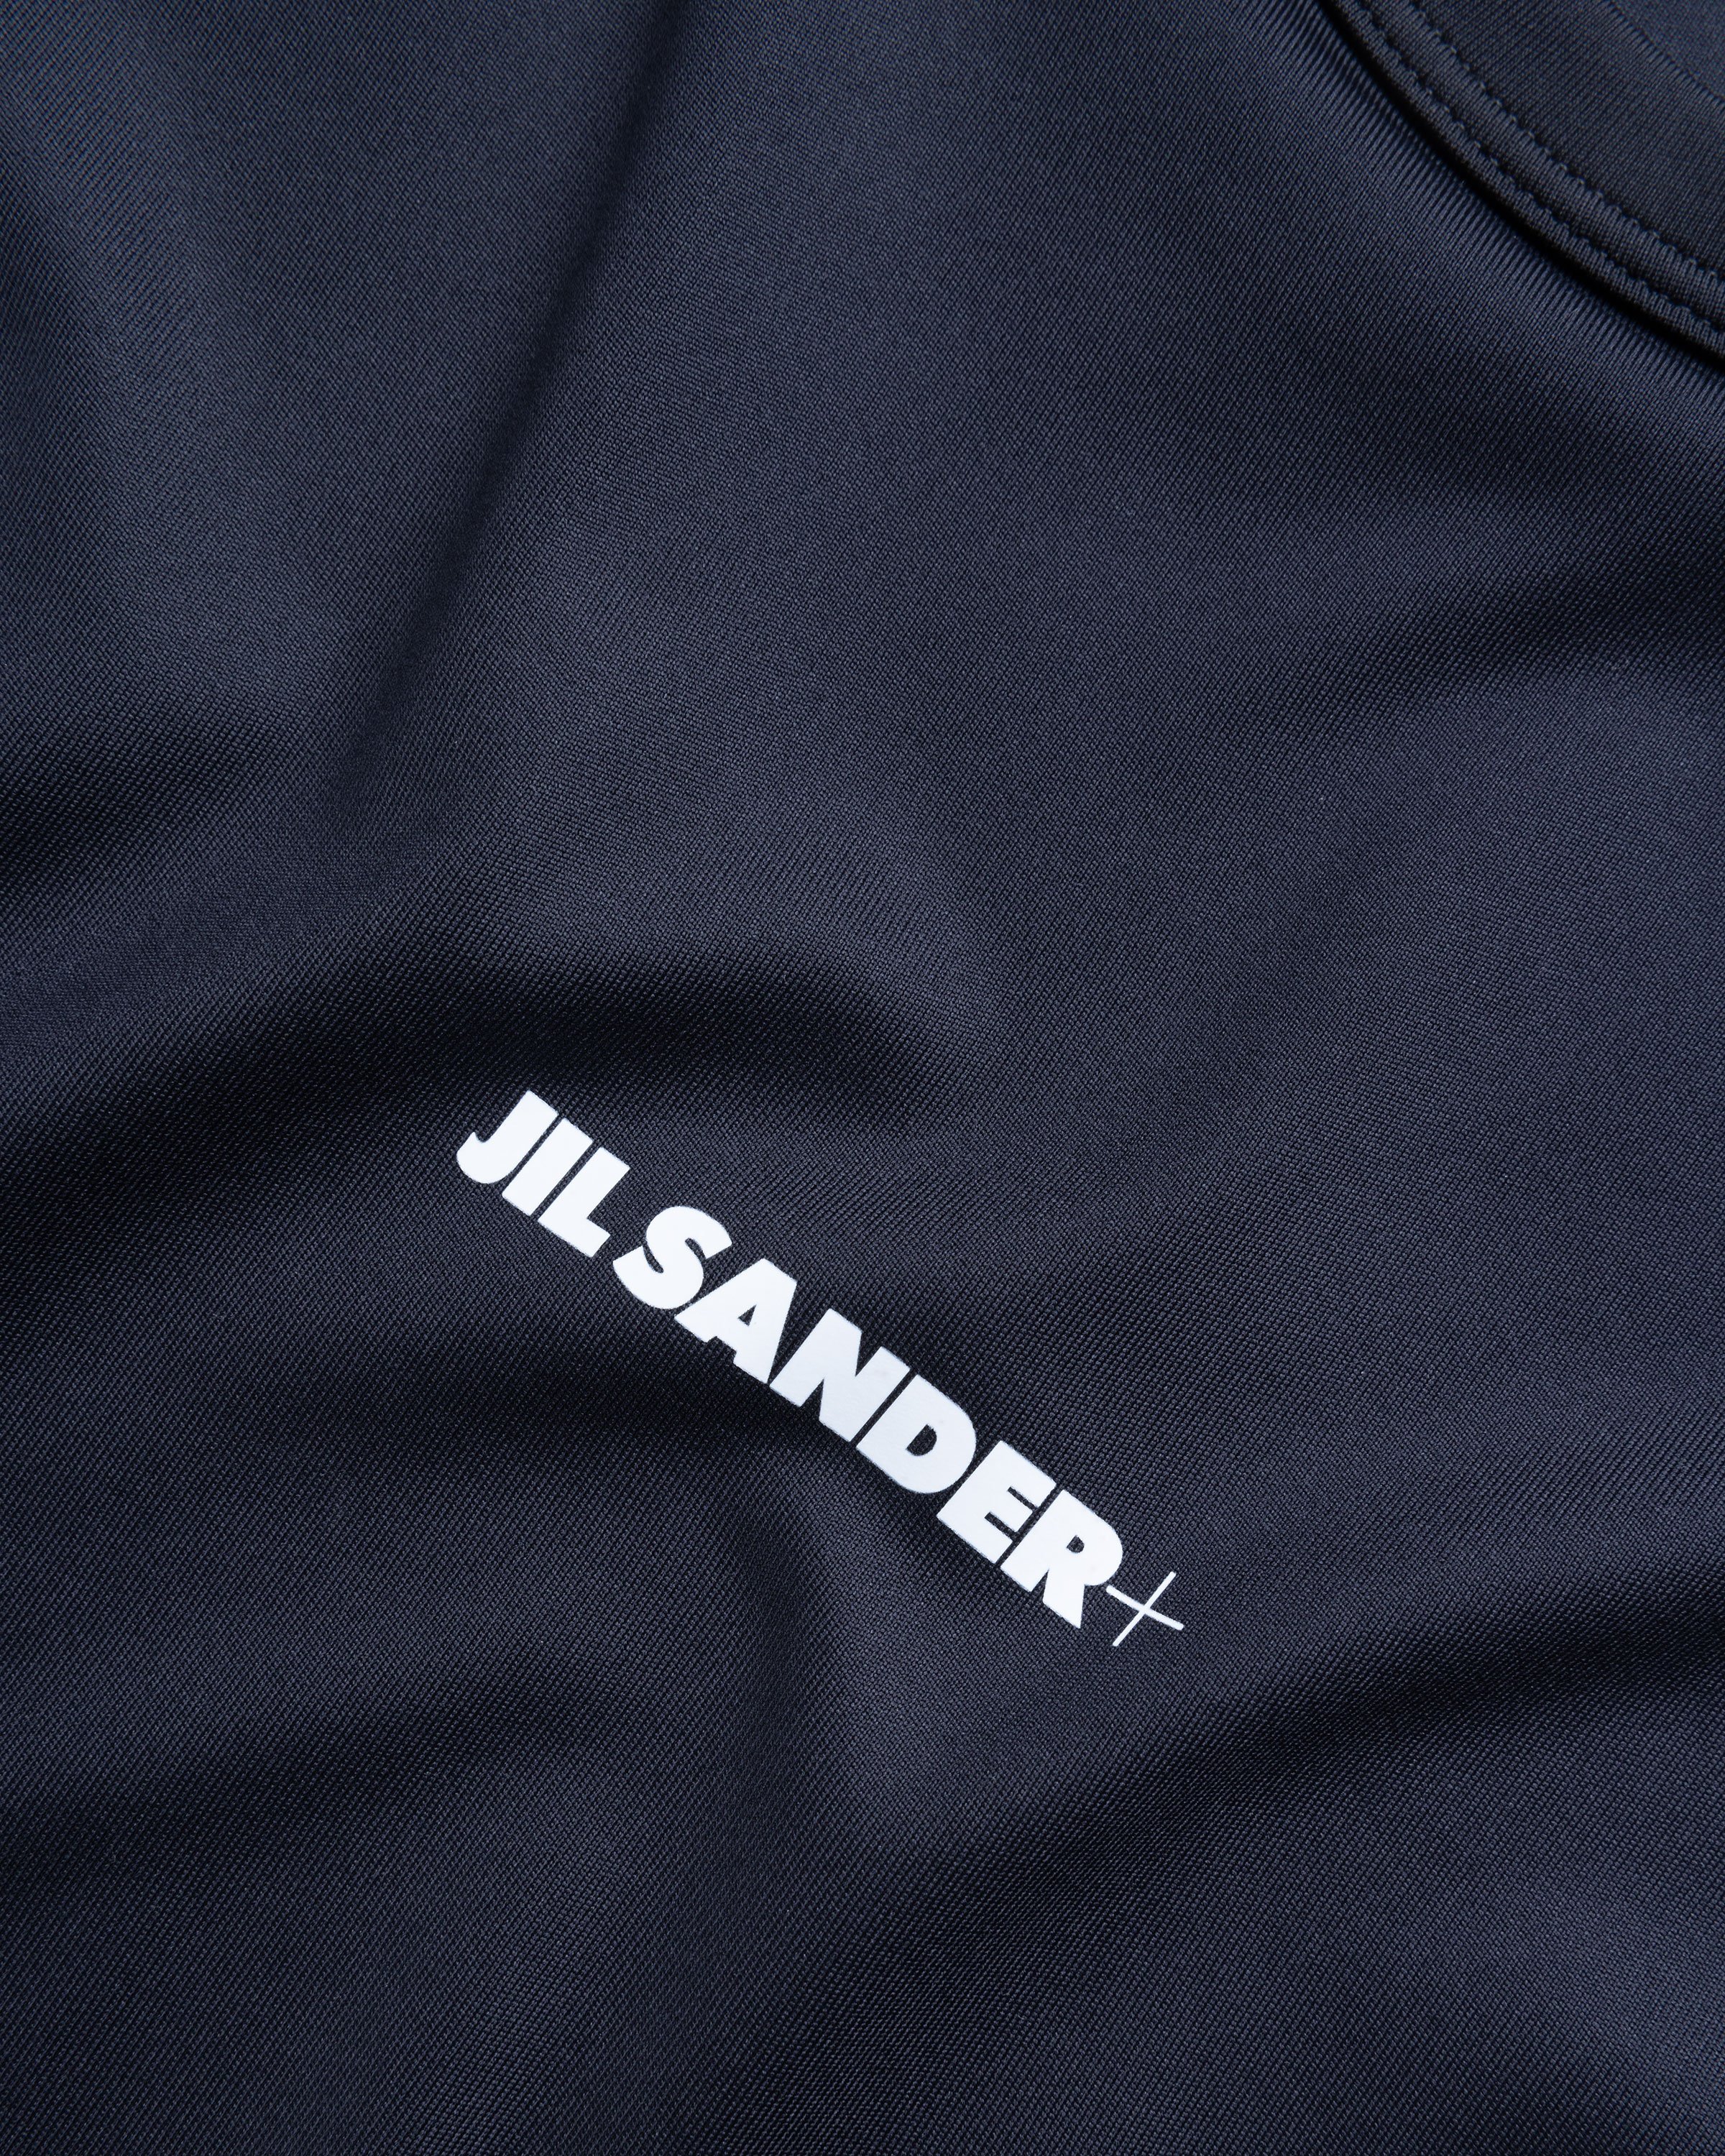 Jil Sander - Logo T-Shirt Black - Clothing - Black - Image 6